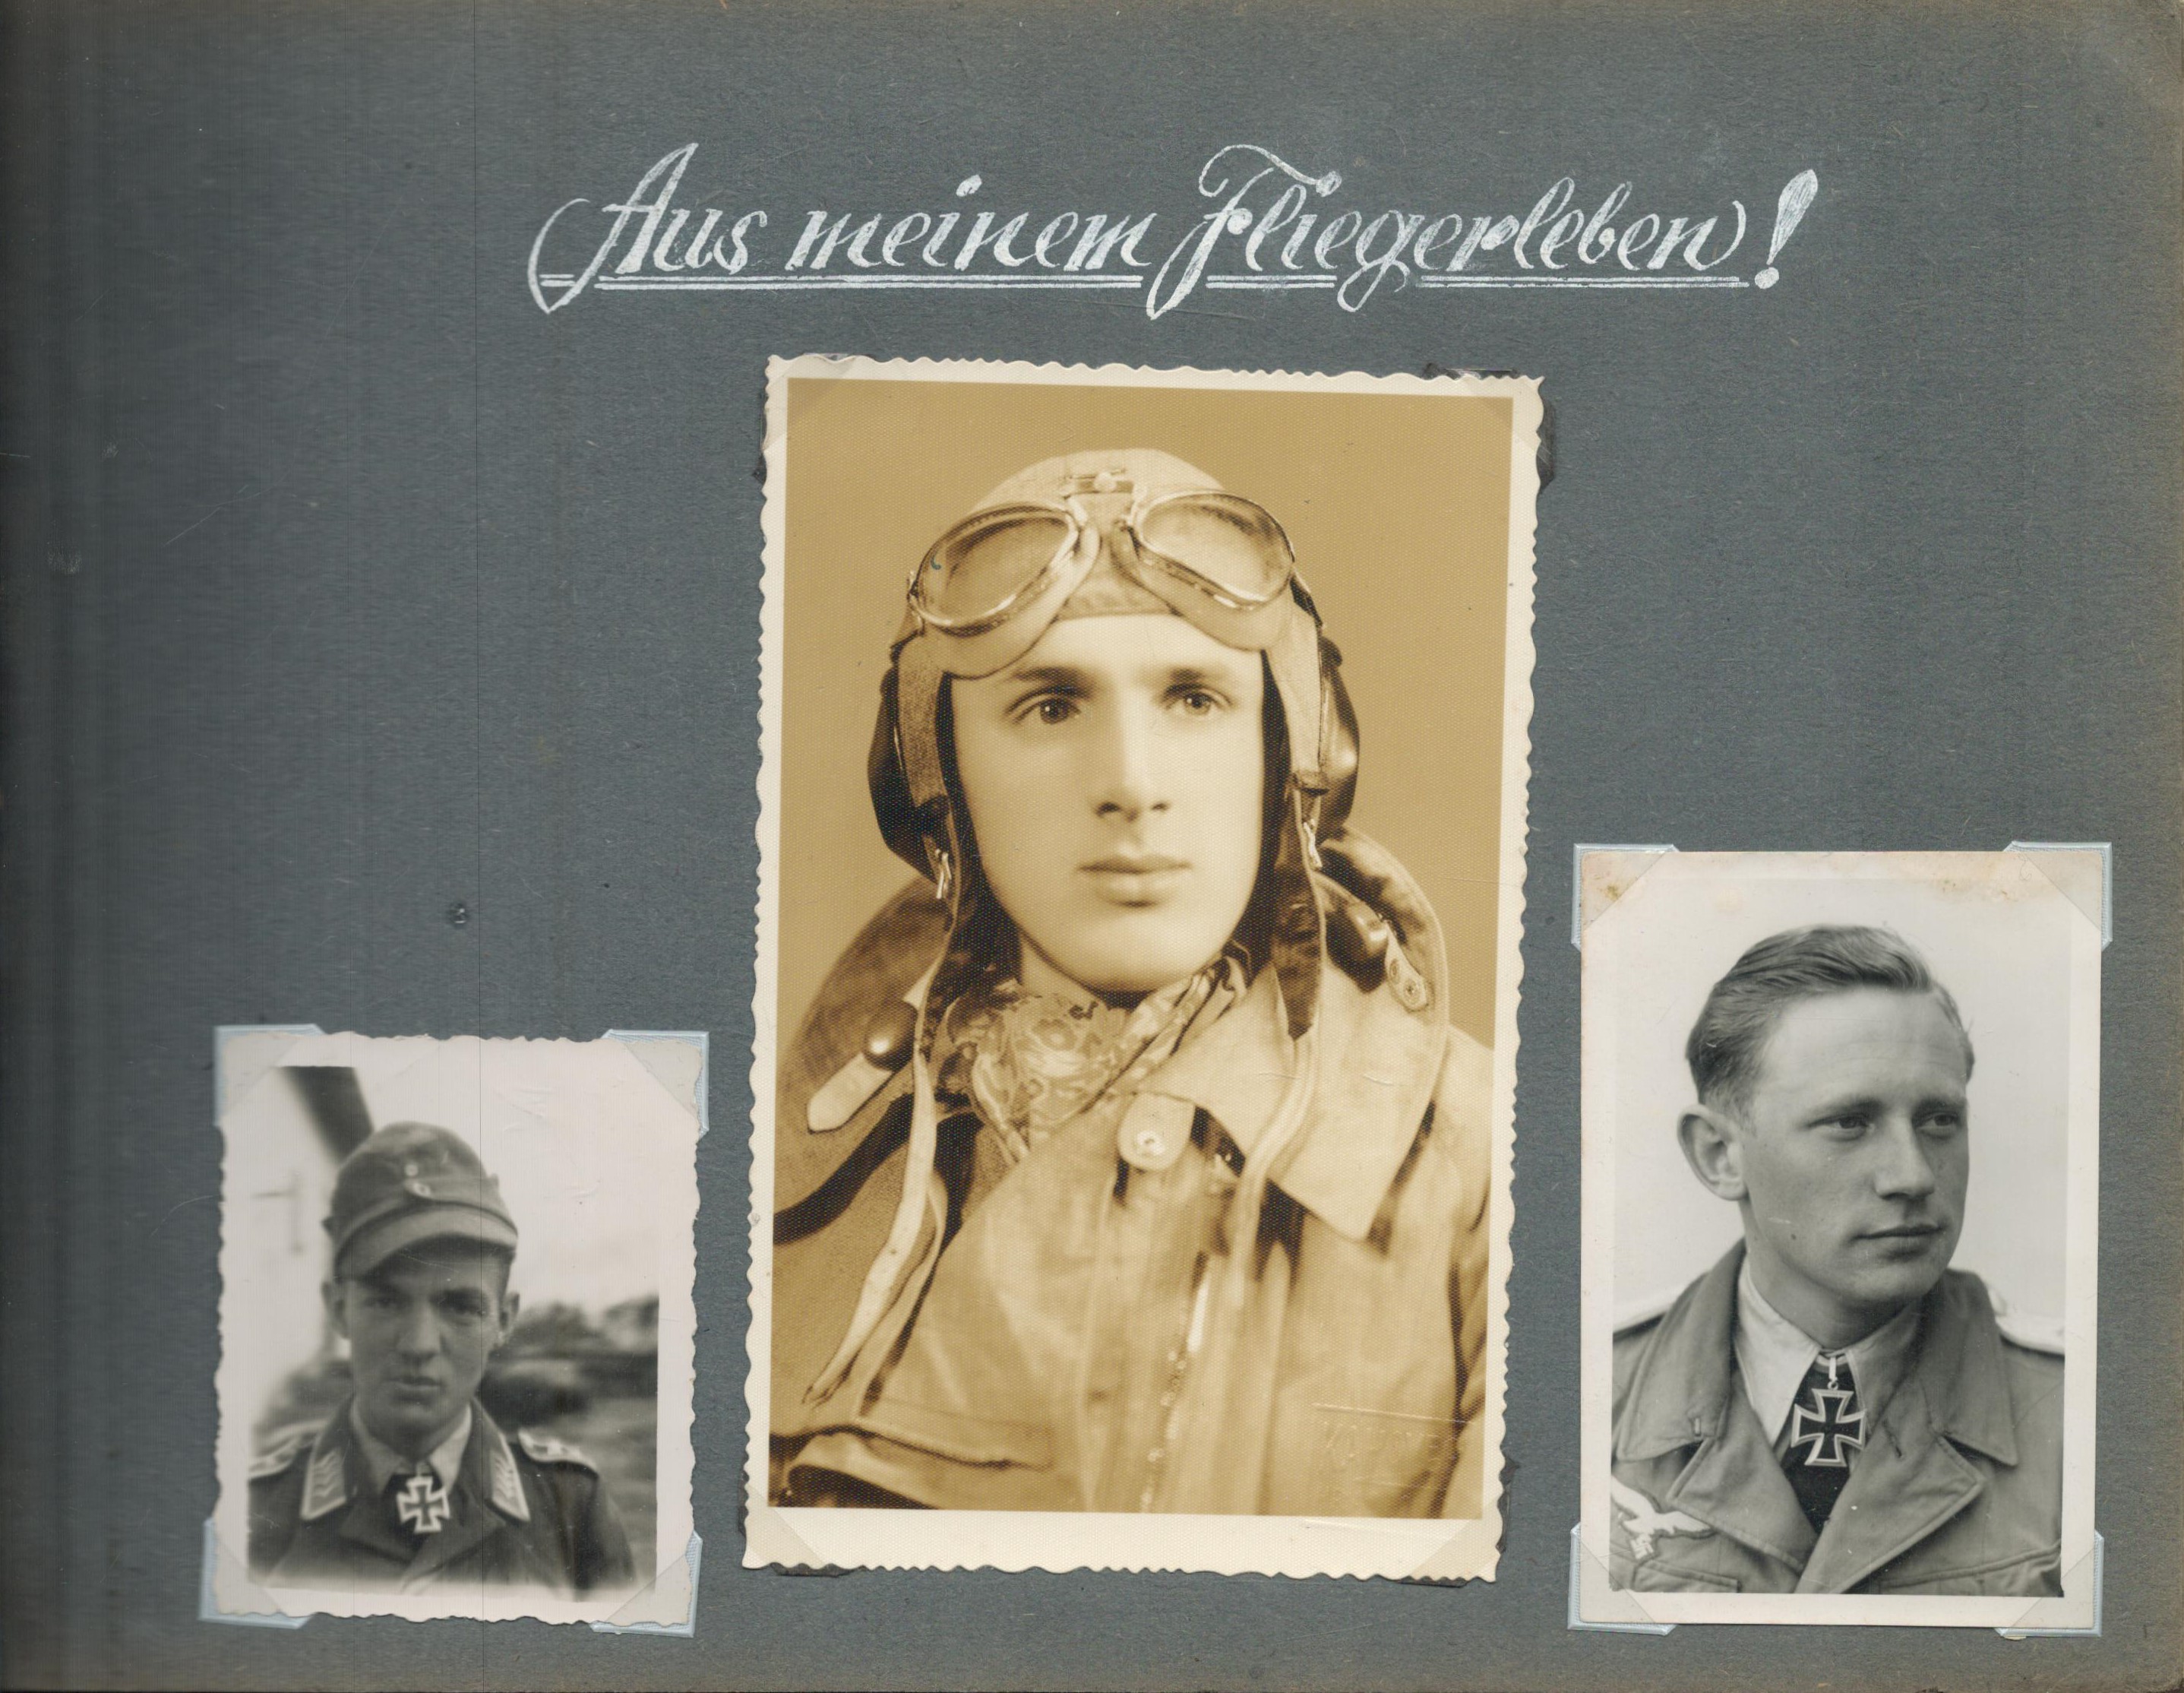 Luftwaffe Stuka Operator photo album of the career and war memories of Erich Heine rear gunner and